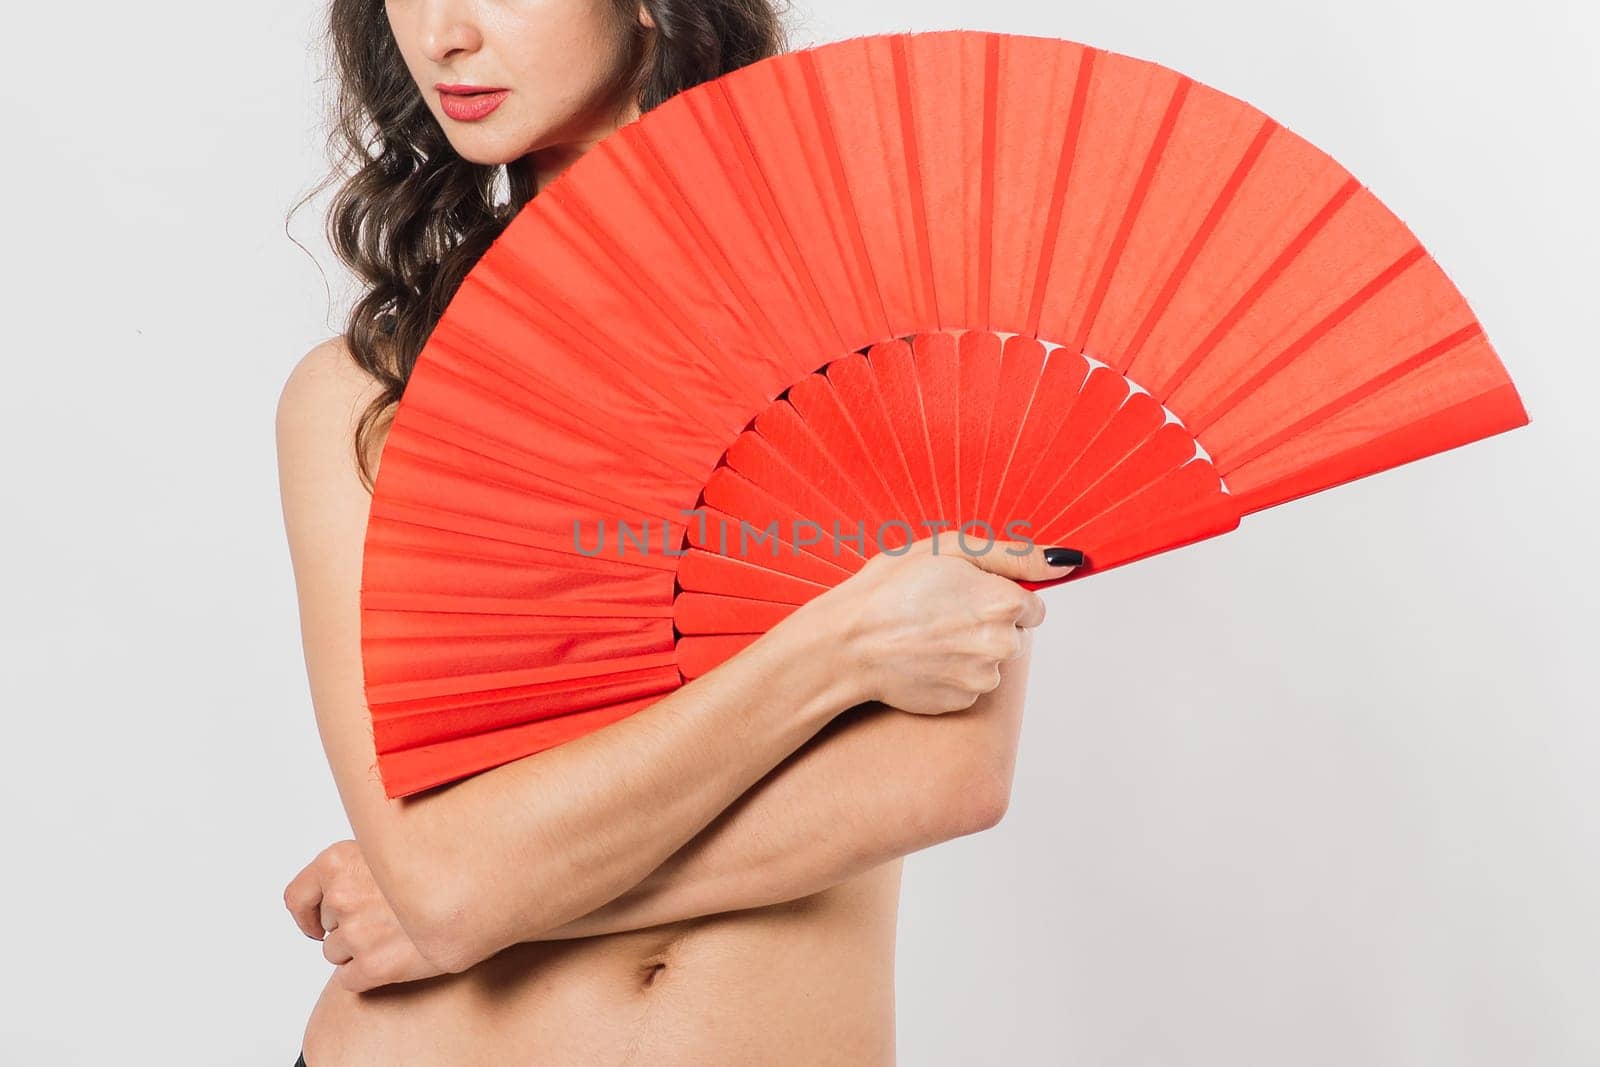 Dancer female with a fan in lingerie, nude